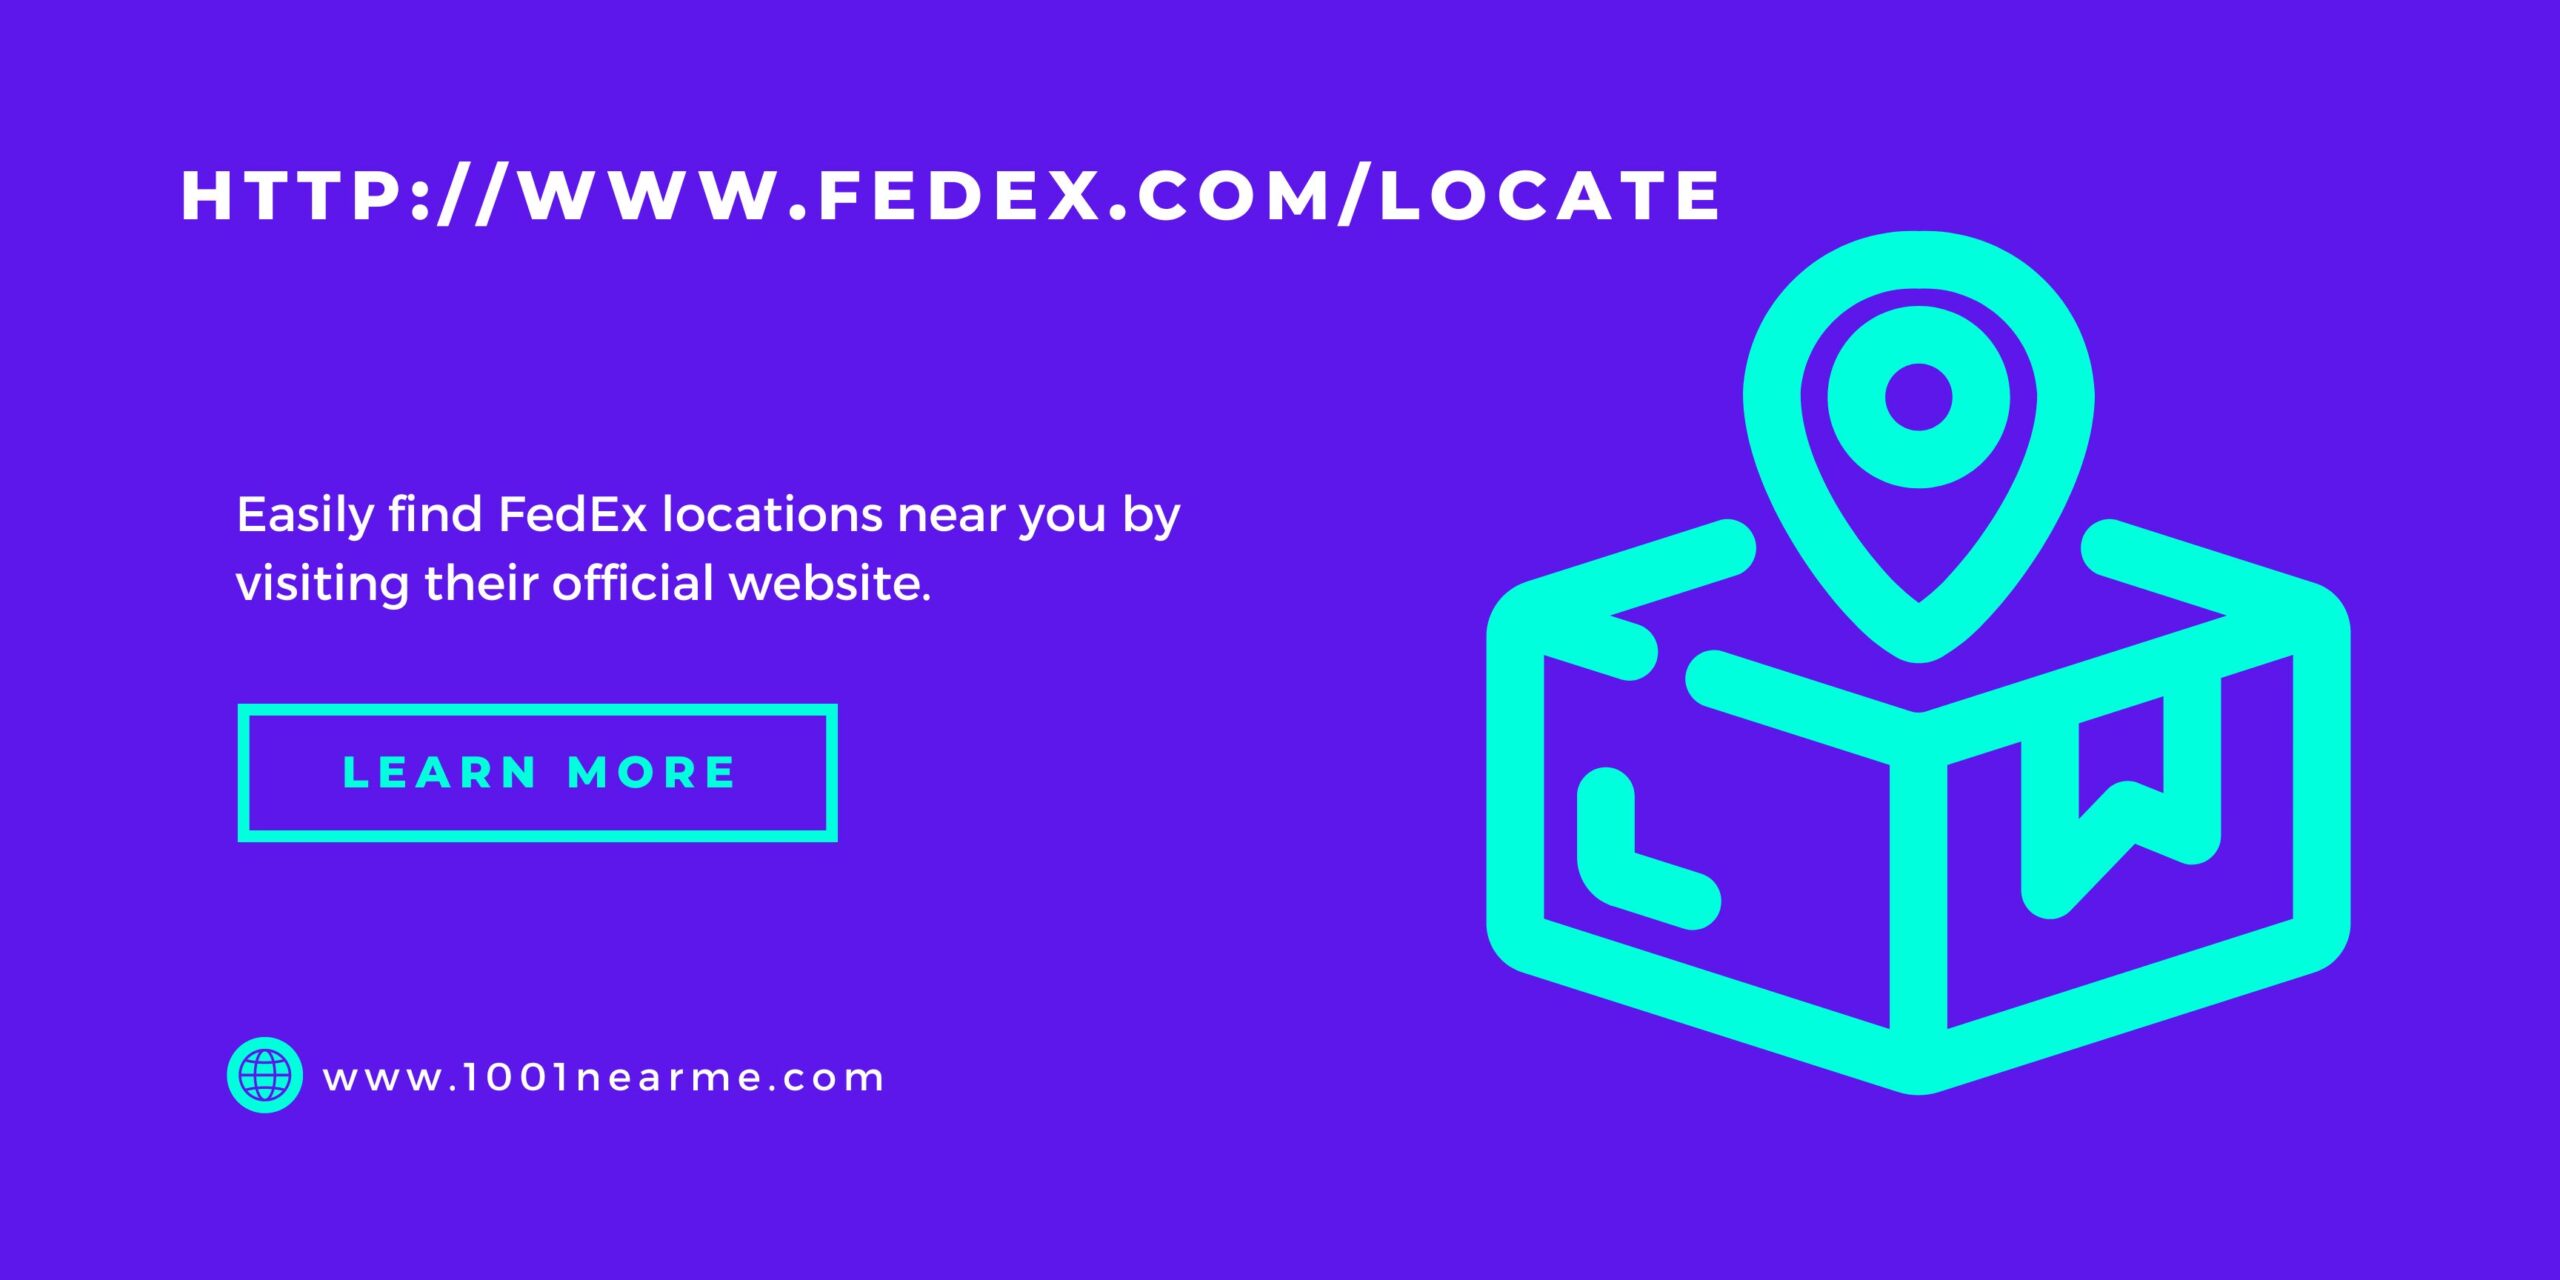 FedEx locations